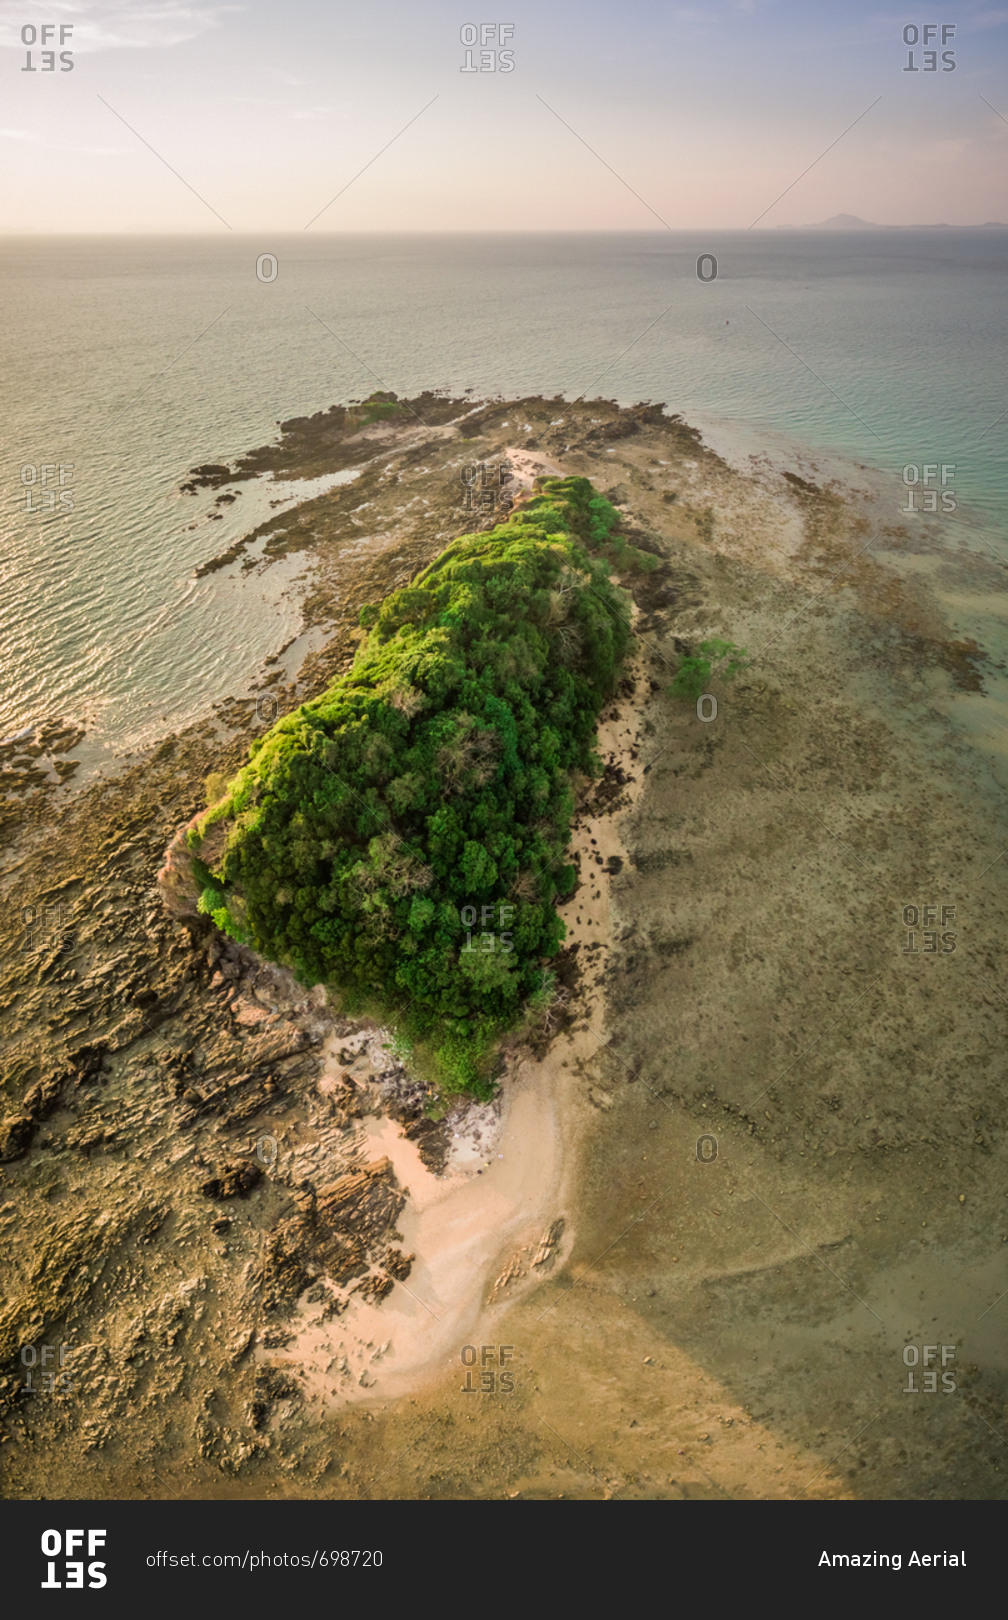 Aerial view of the rocky coast of Koh Lanta island, Thailand.